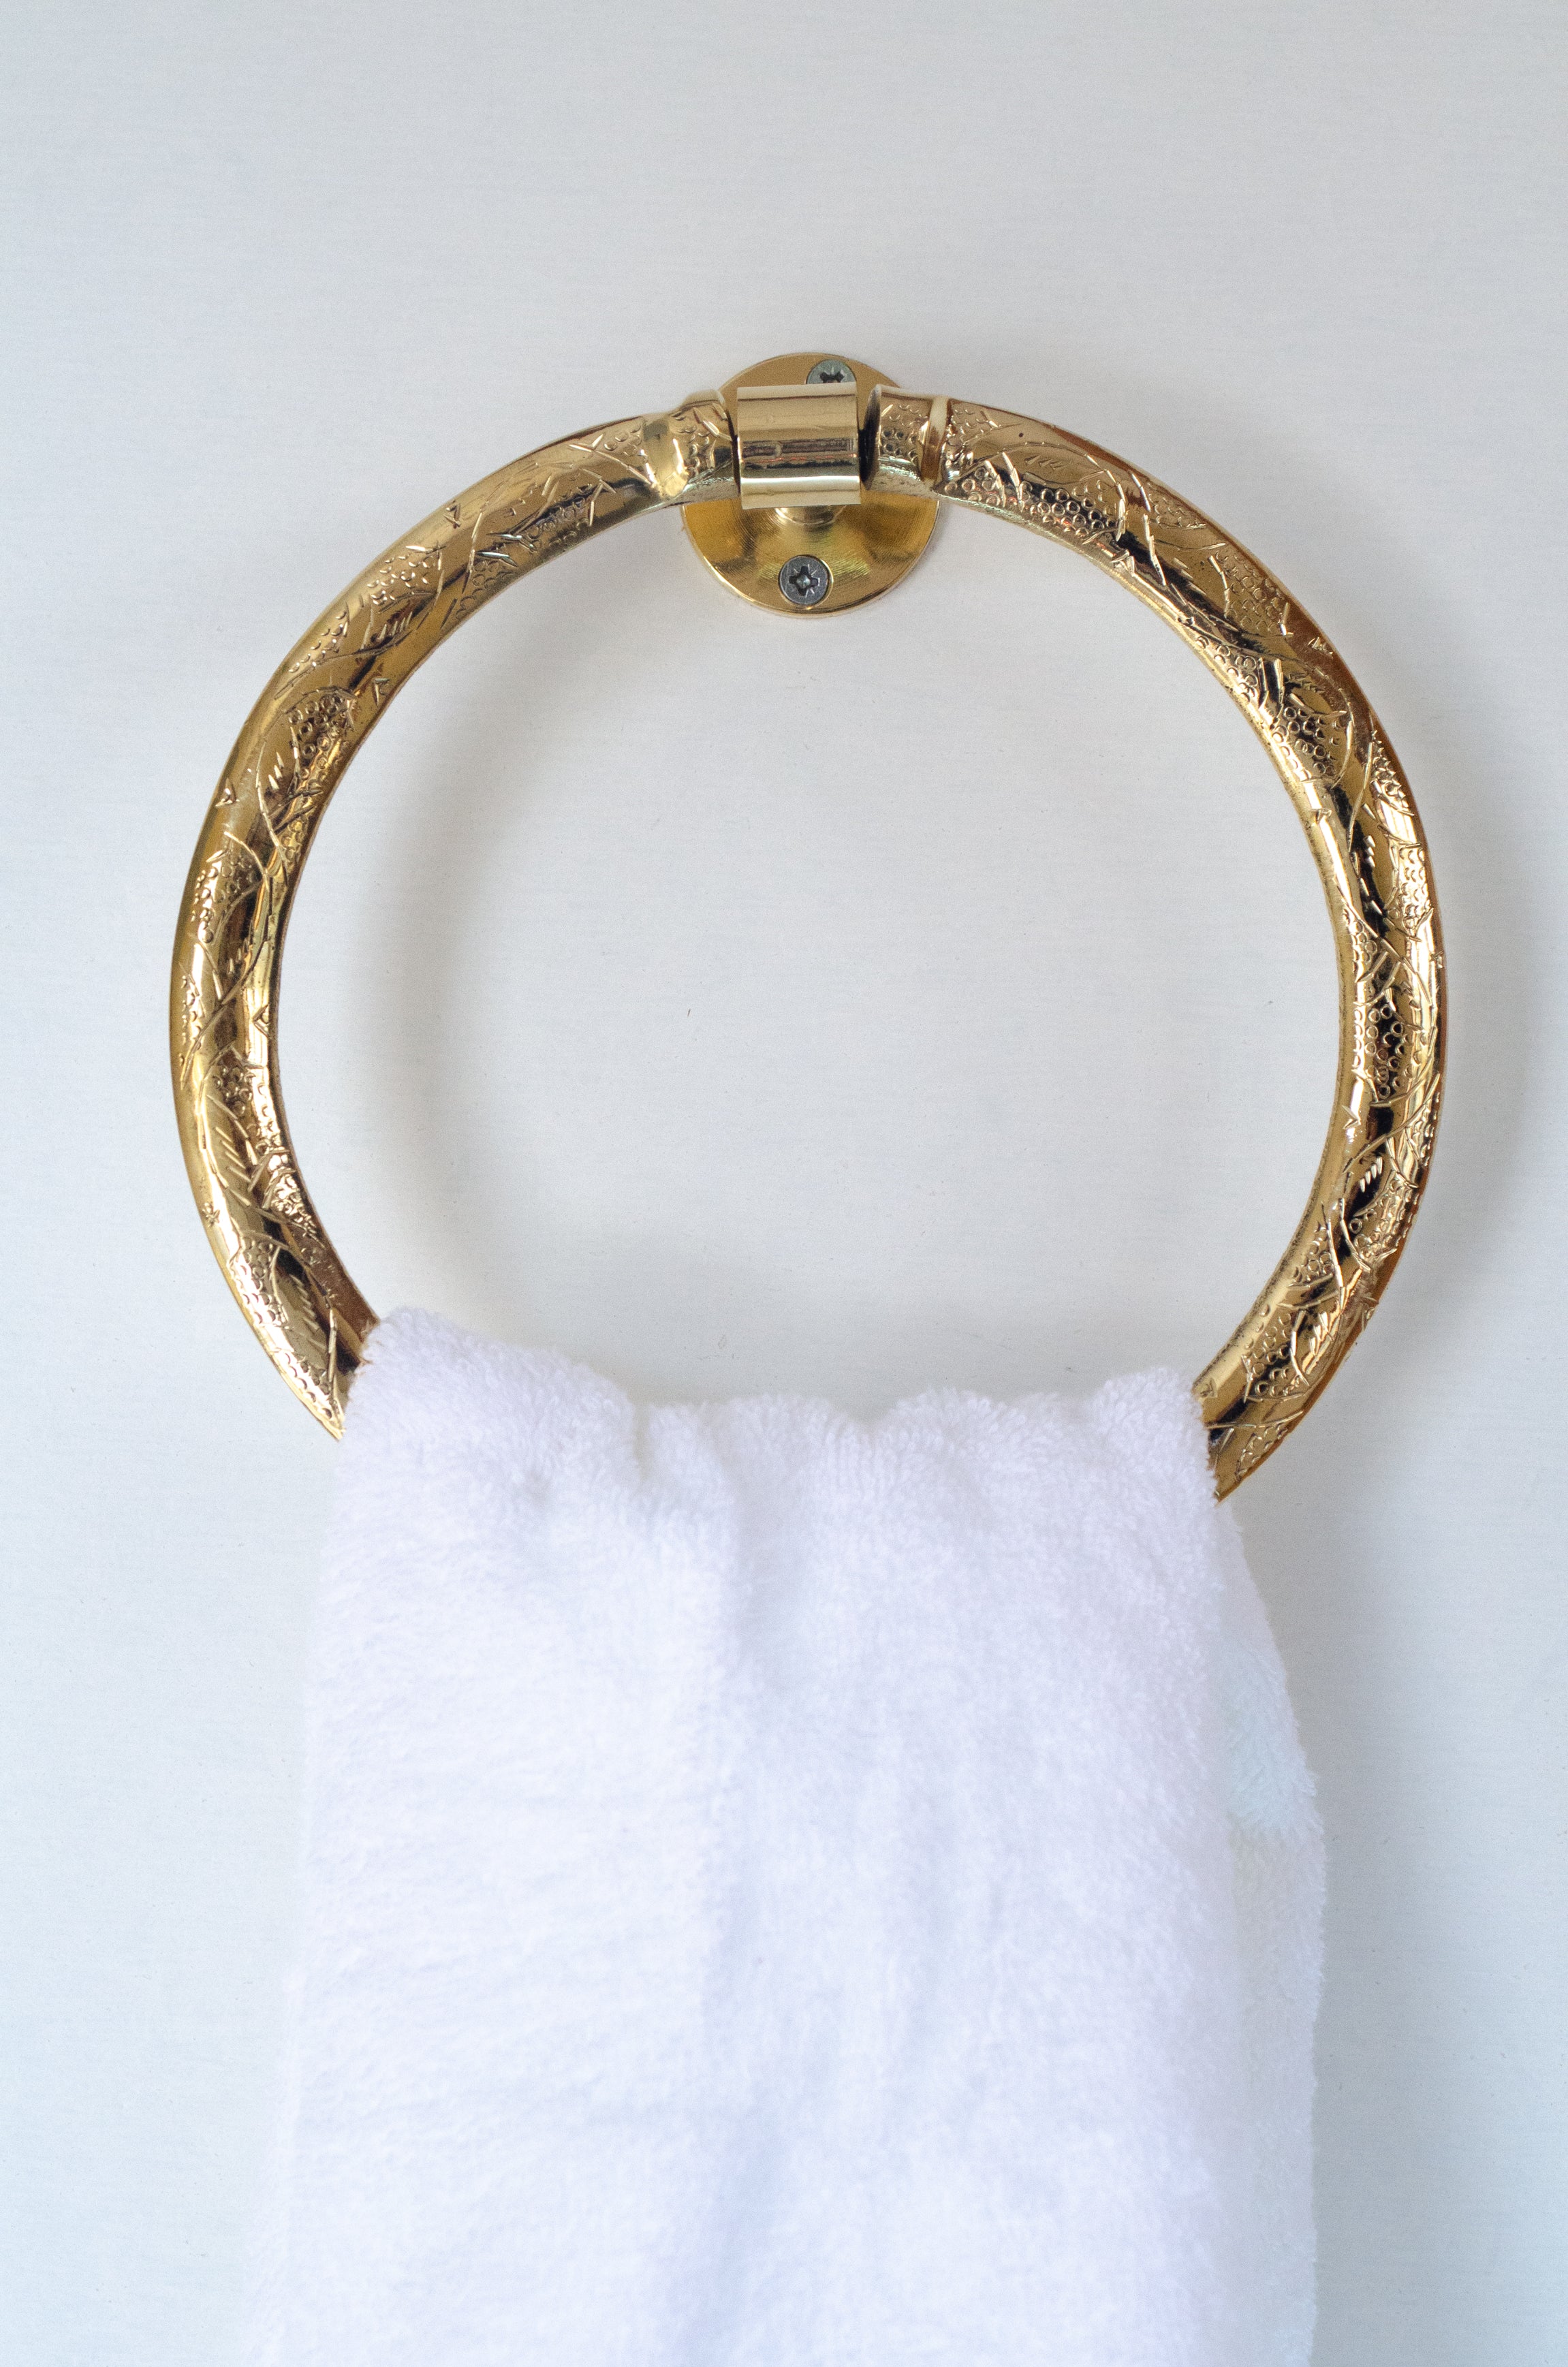 Brass Towel Ring - Bathroom Towel Holder ISA03